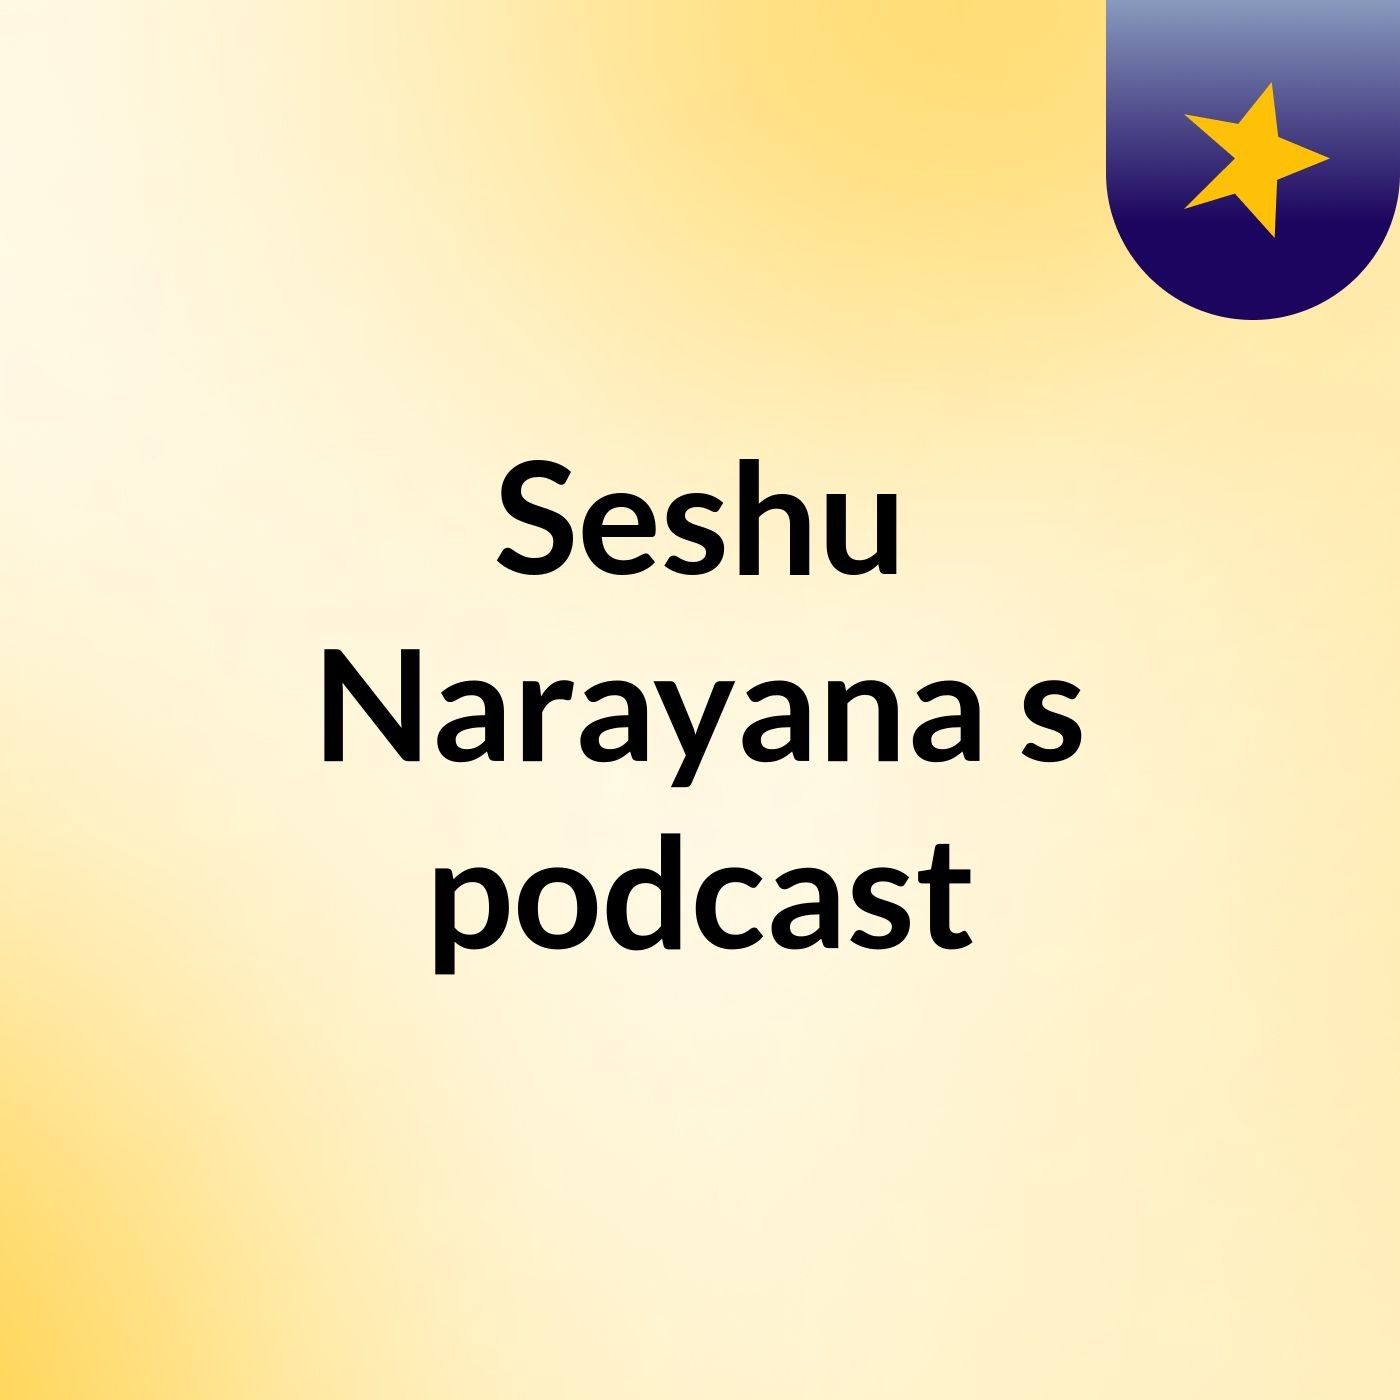 Episode 4 - Seshu Narayana's podcast